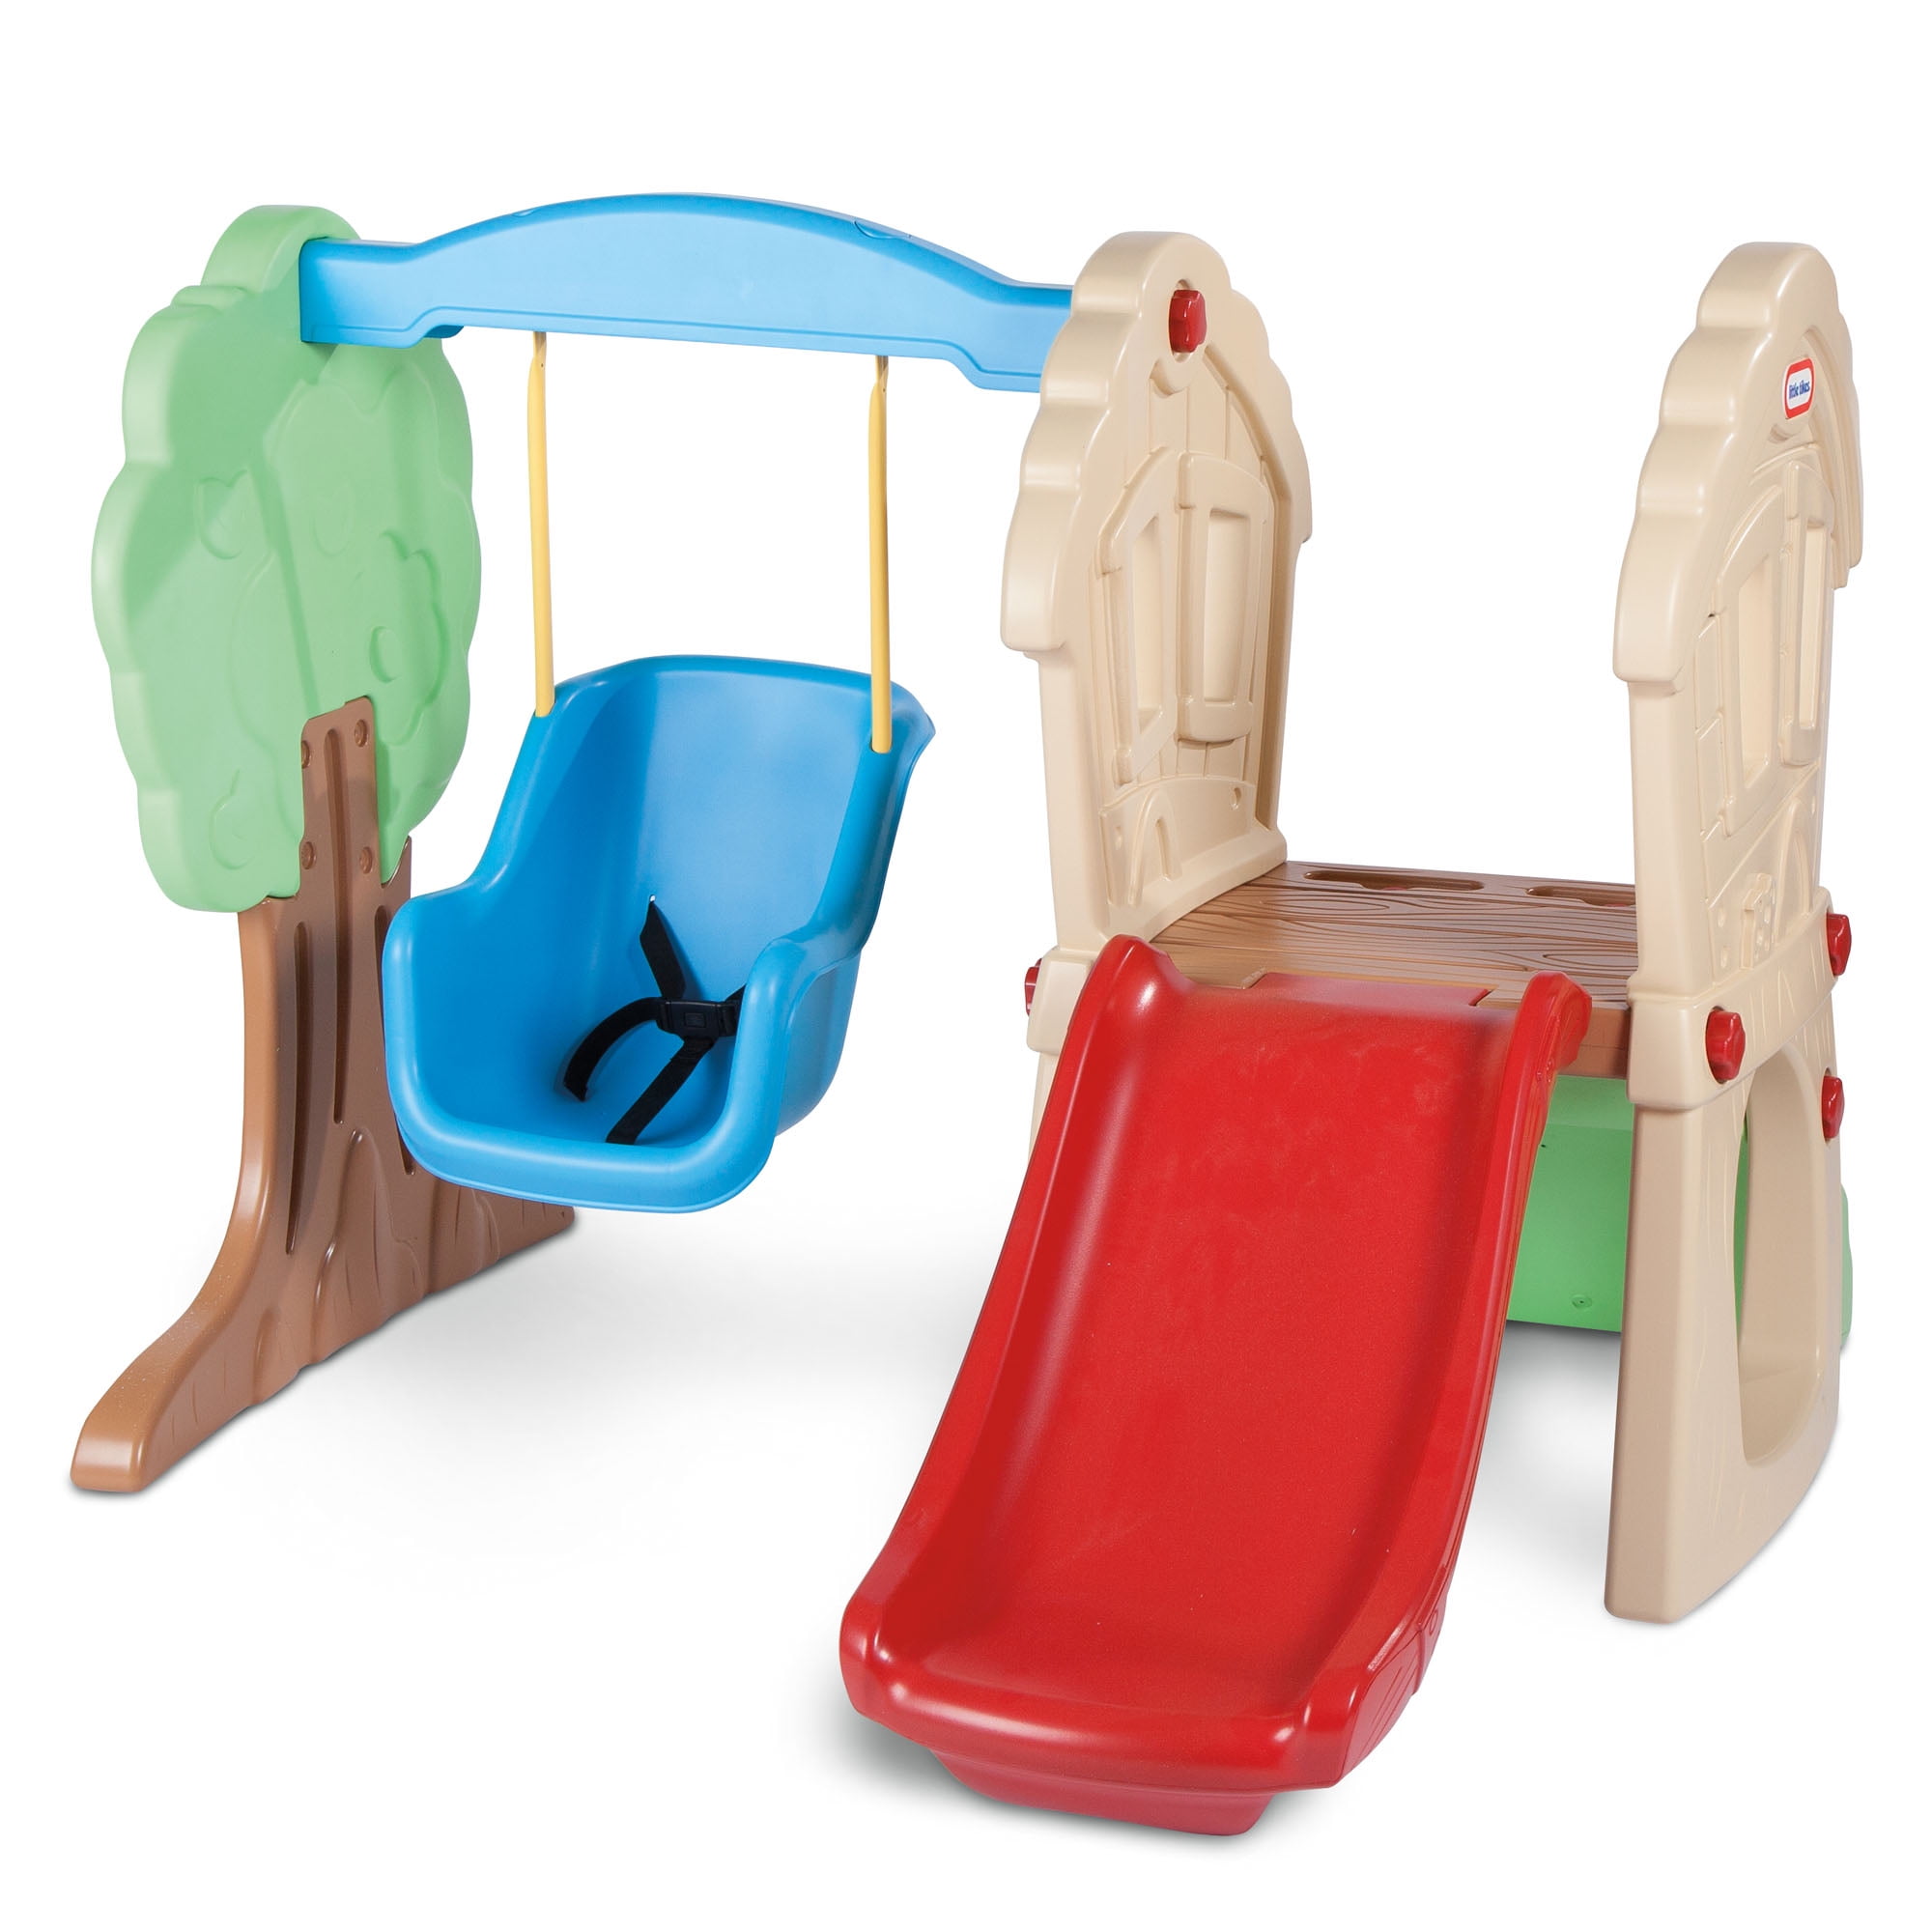 Kids Garden Swing and Slide Set Toddler Baby Indoor Outdoor Playground Climb Toy 